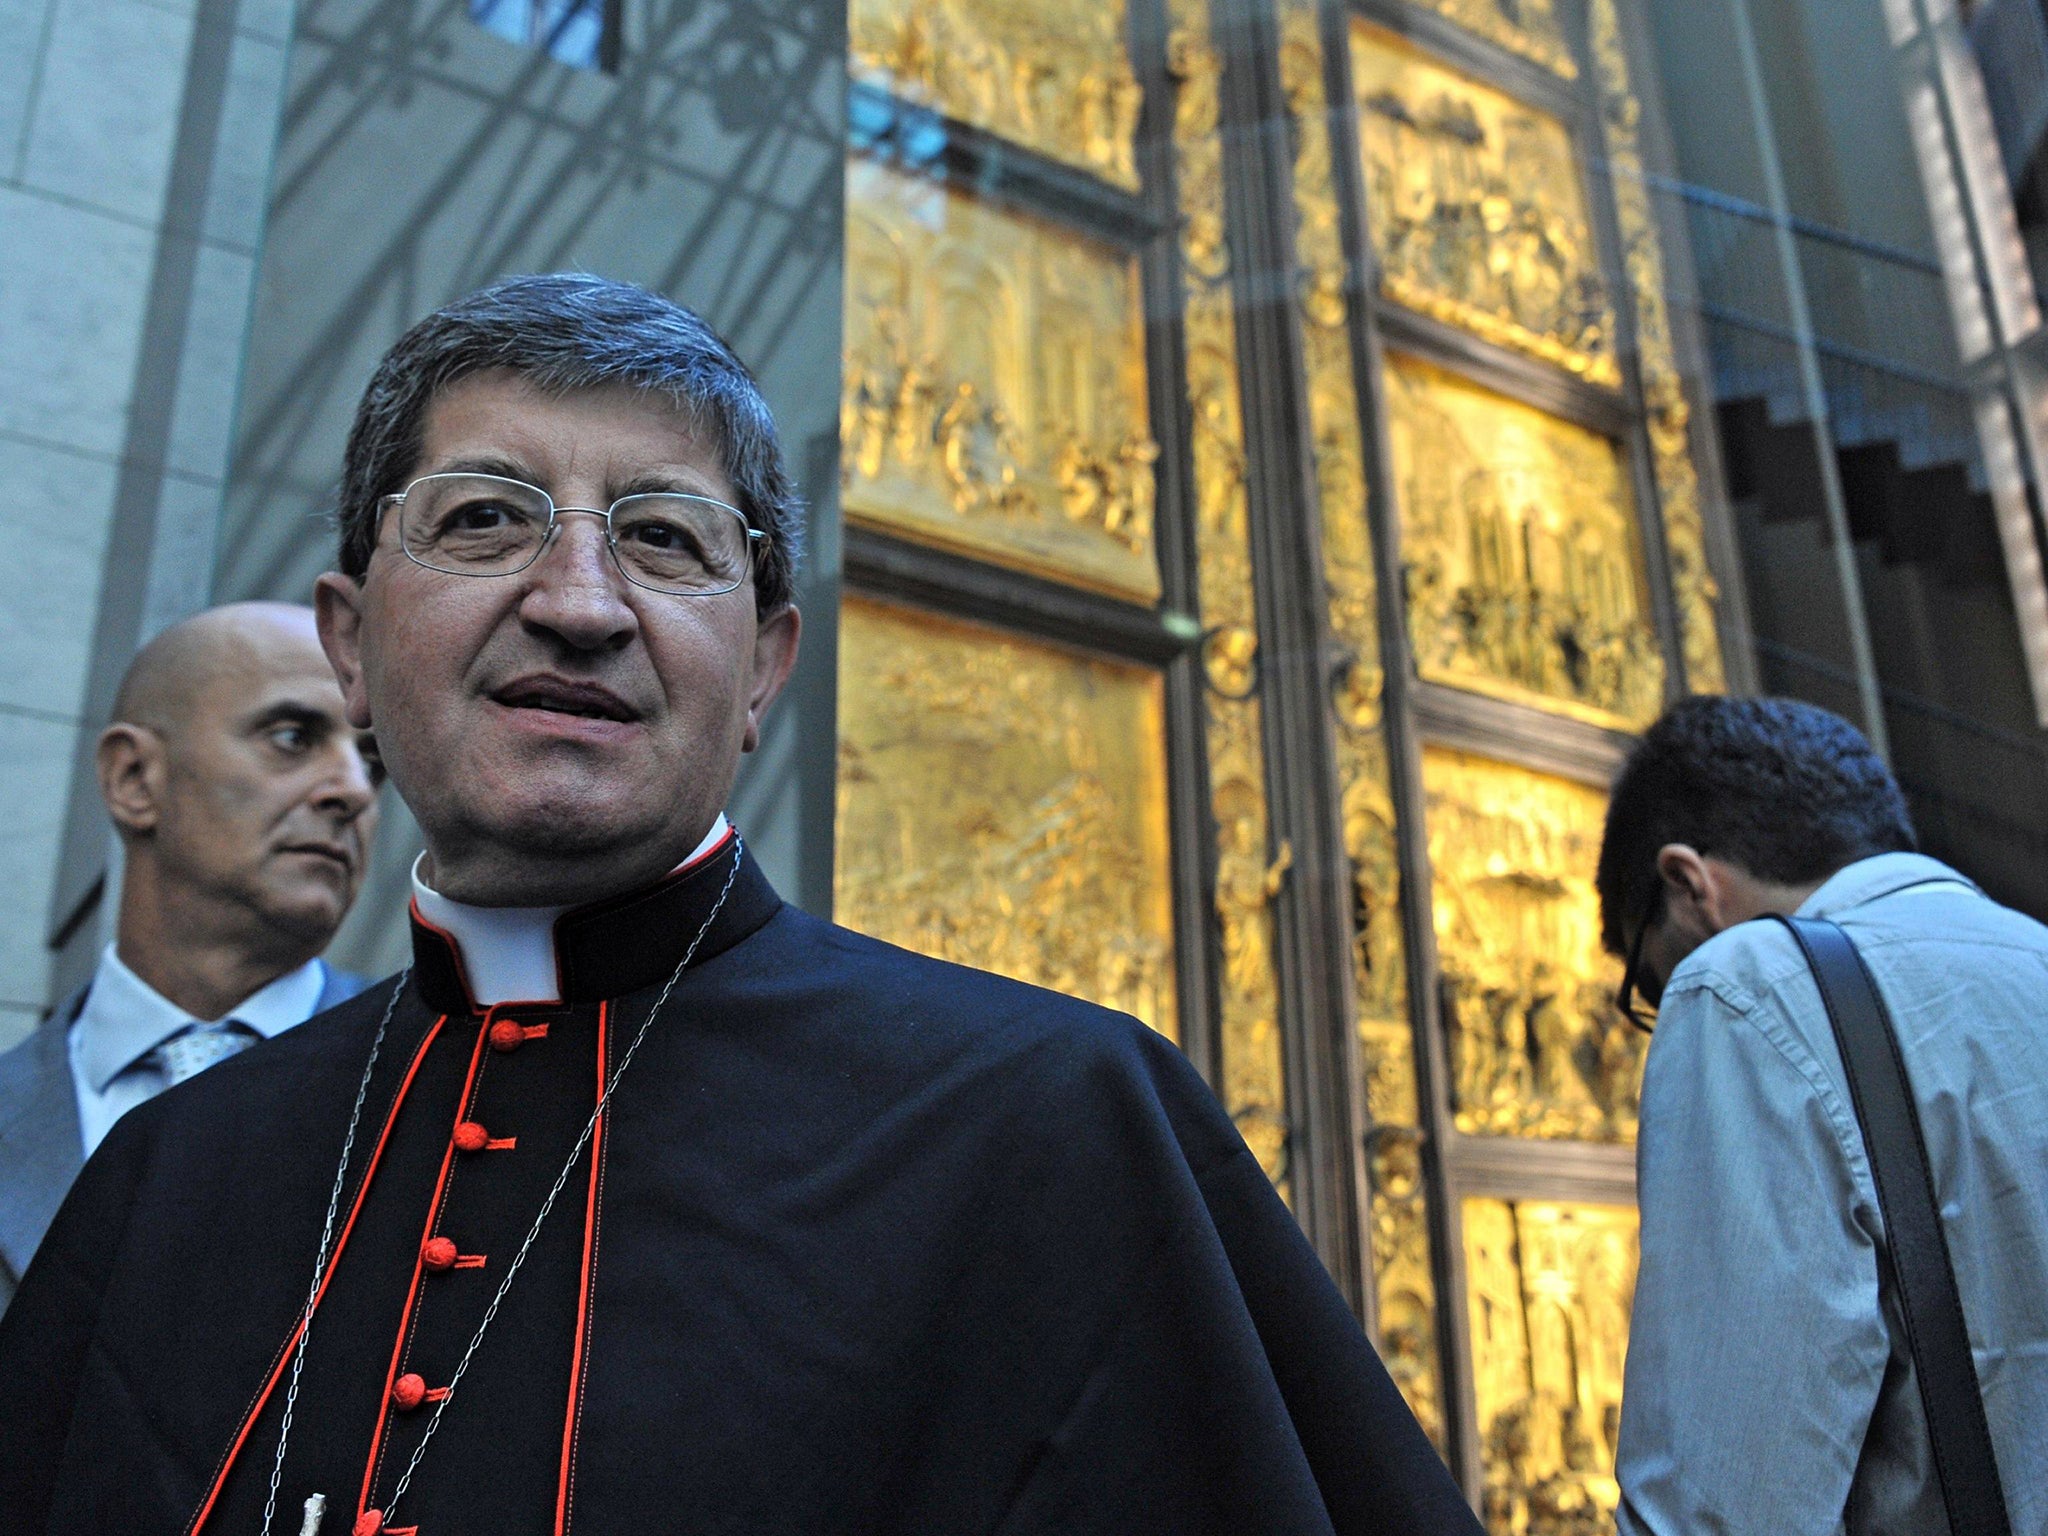 Florence’s Archbishop, Cardinal Giuseppe Betori